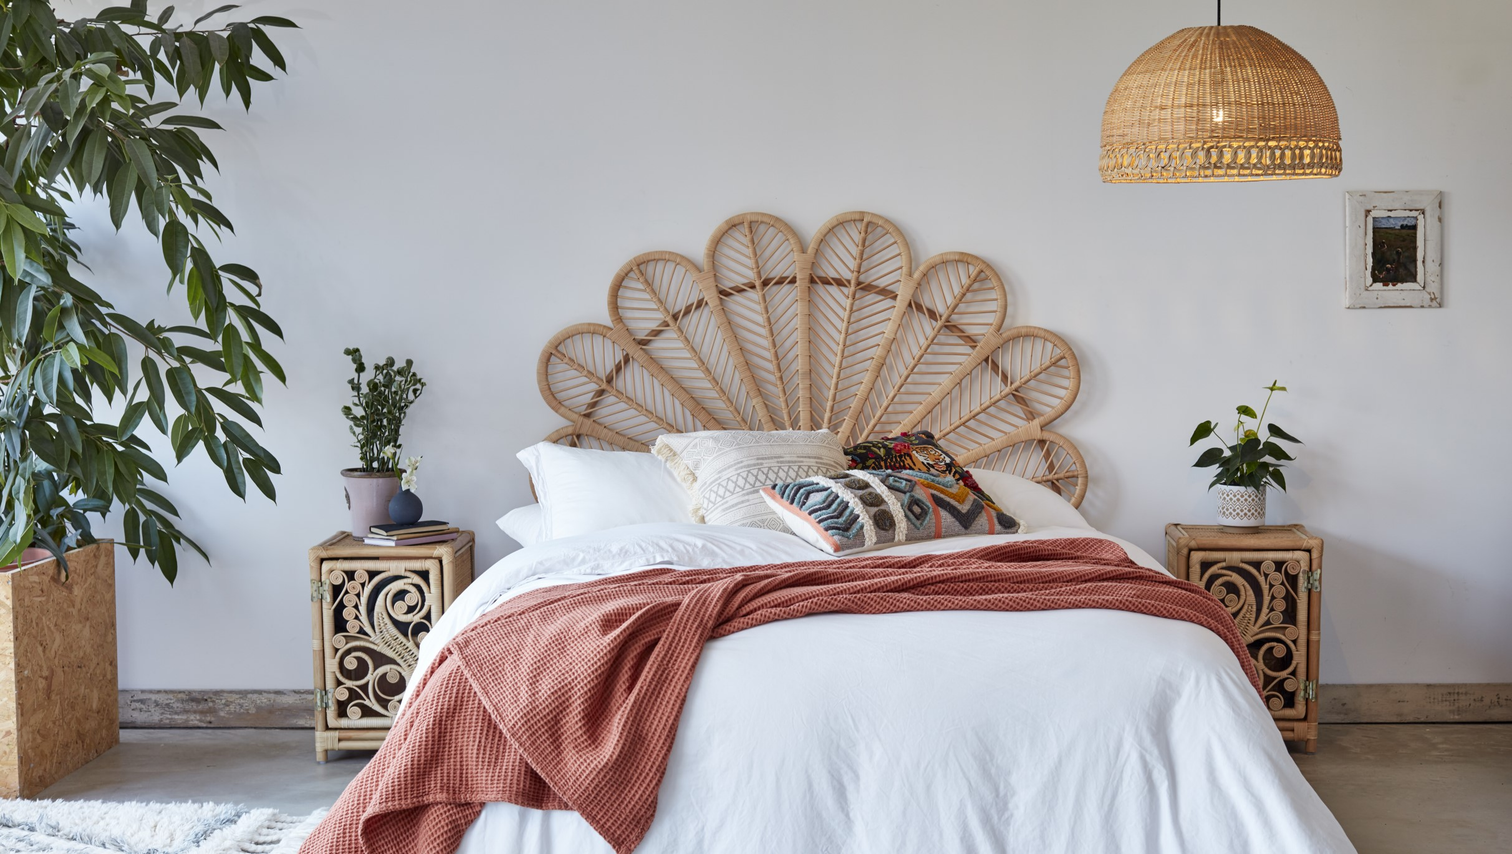 Luxury Handmade Indoor Natural Rattan Furniture | The Rattan Company